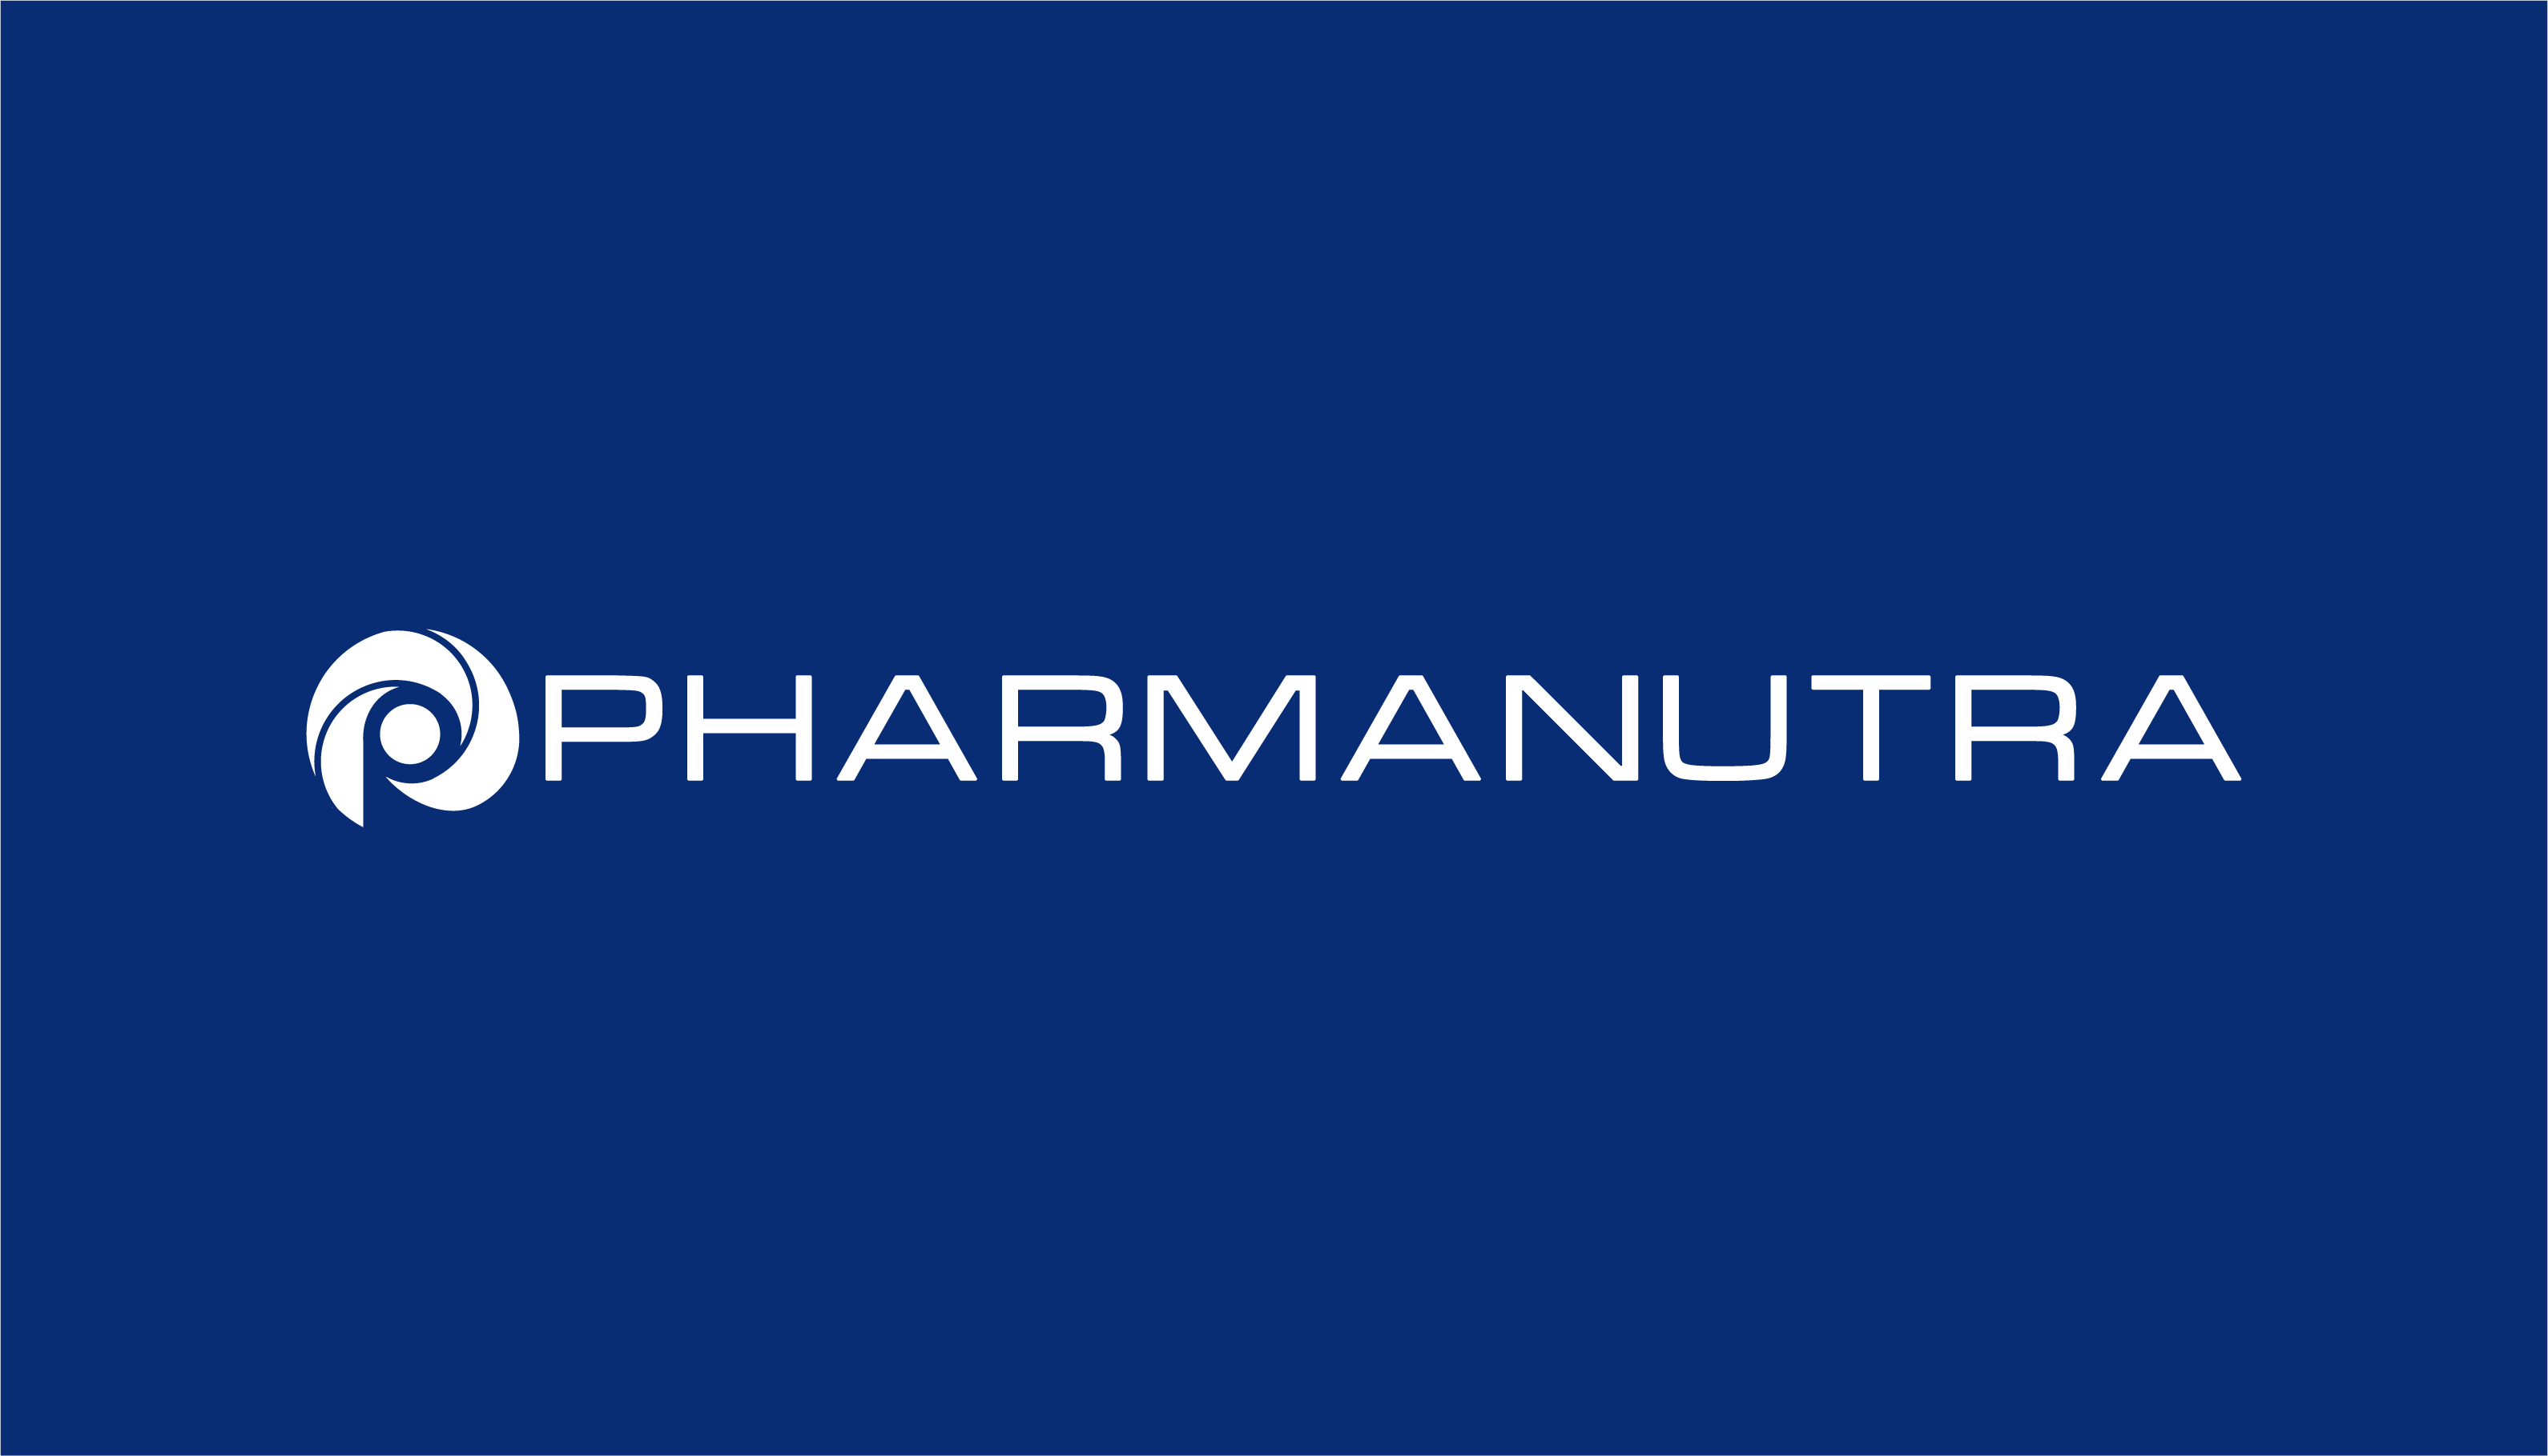 PharmaNutra Spa